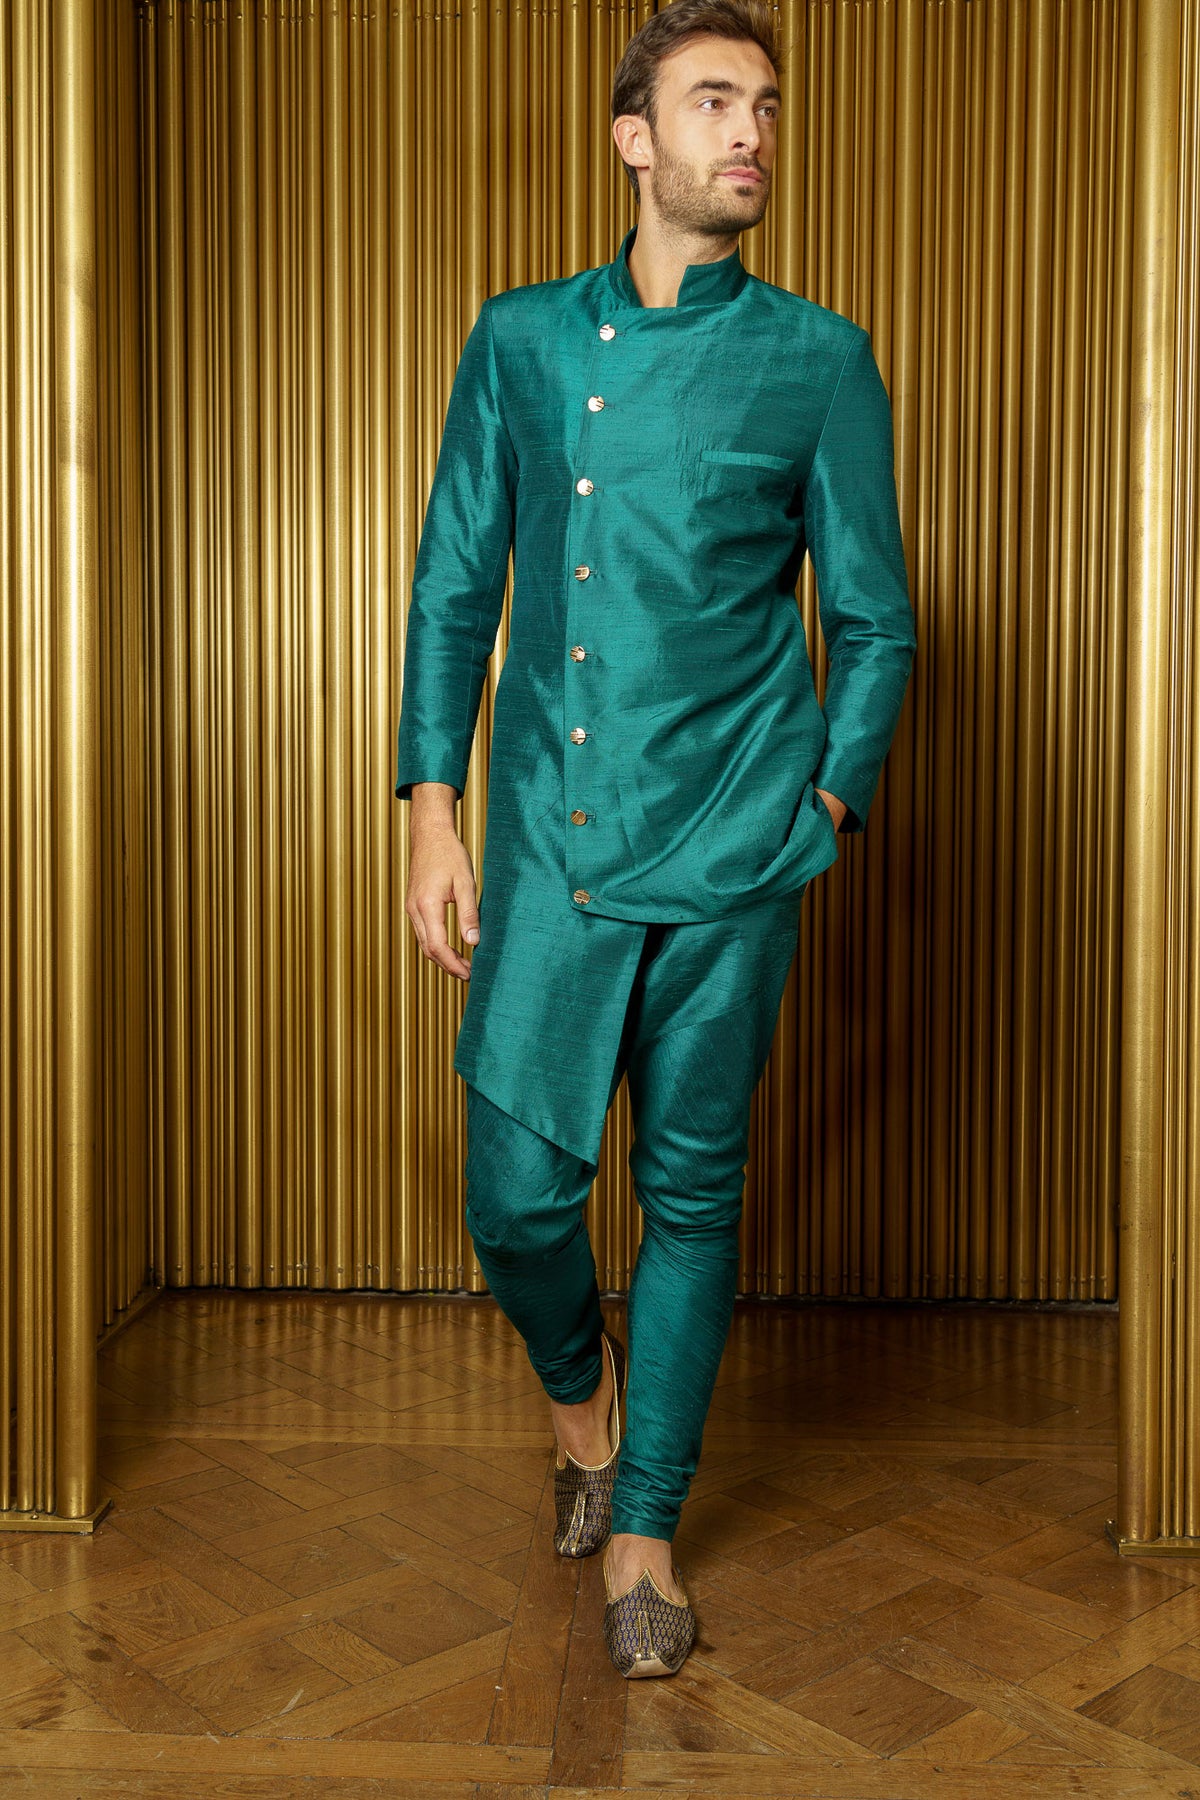 BRAR Asymmetrical Sherwani Jacket in Evergreen - Front View - Harleen Kaur - Indian Menswear